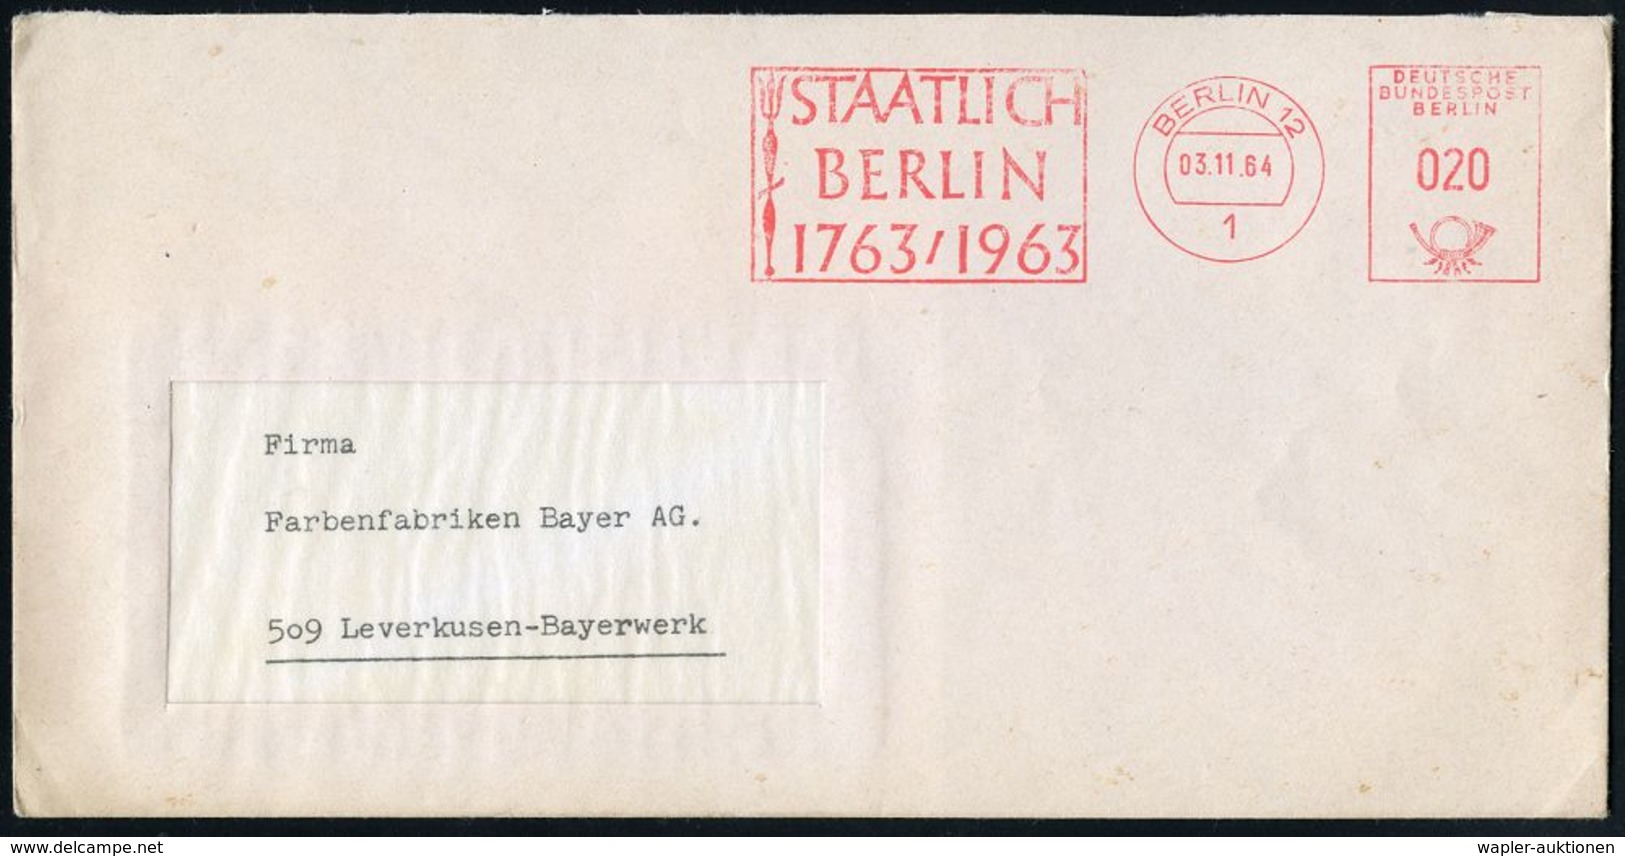 KERAMIK / PORZELLAN / MANUFAKTUREN : 1 BERLIN 12/ STAATLICH/ BERLIN/ 1763-1963 1964 (Nov.) Seltener Jubil.-AFS (Signet)  - Porzellan